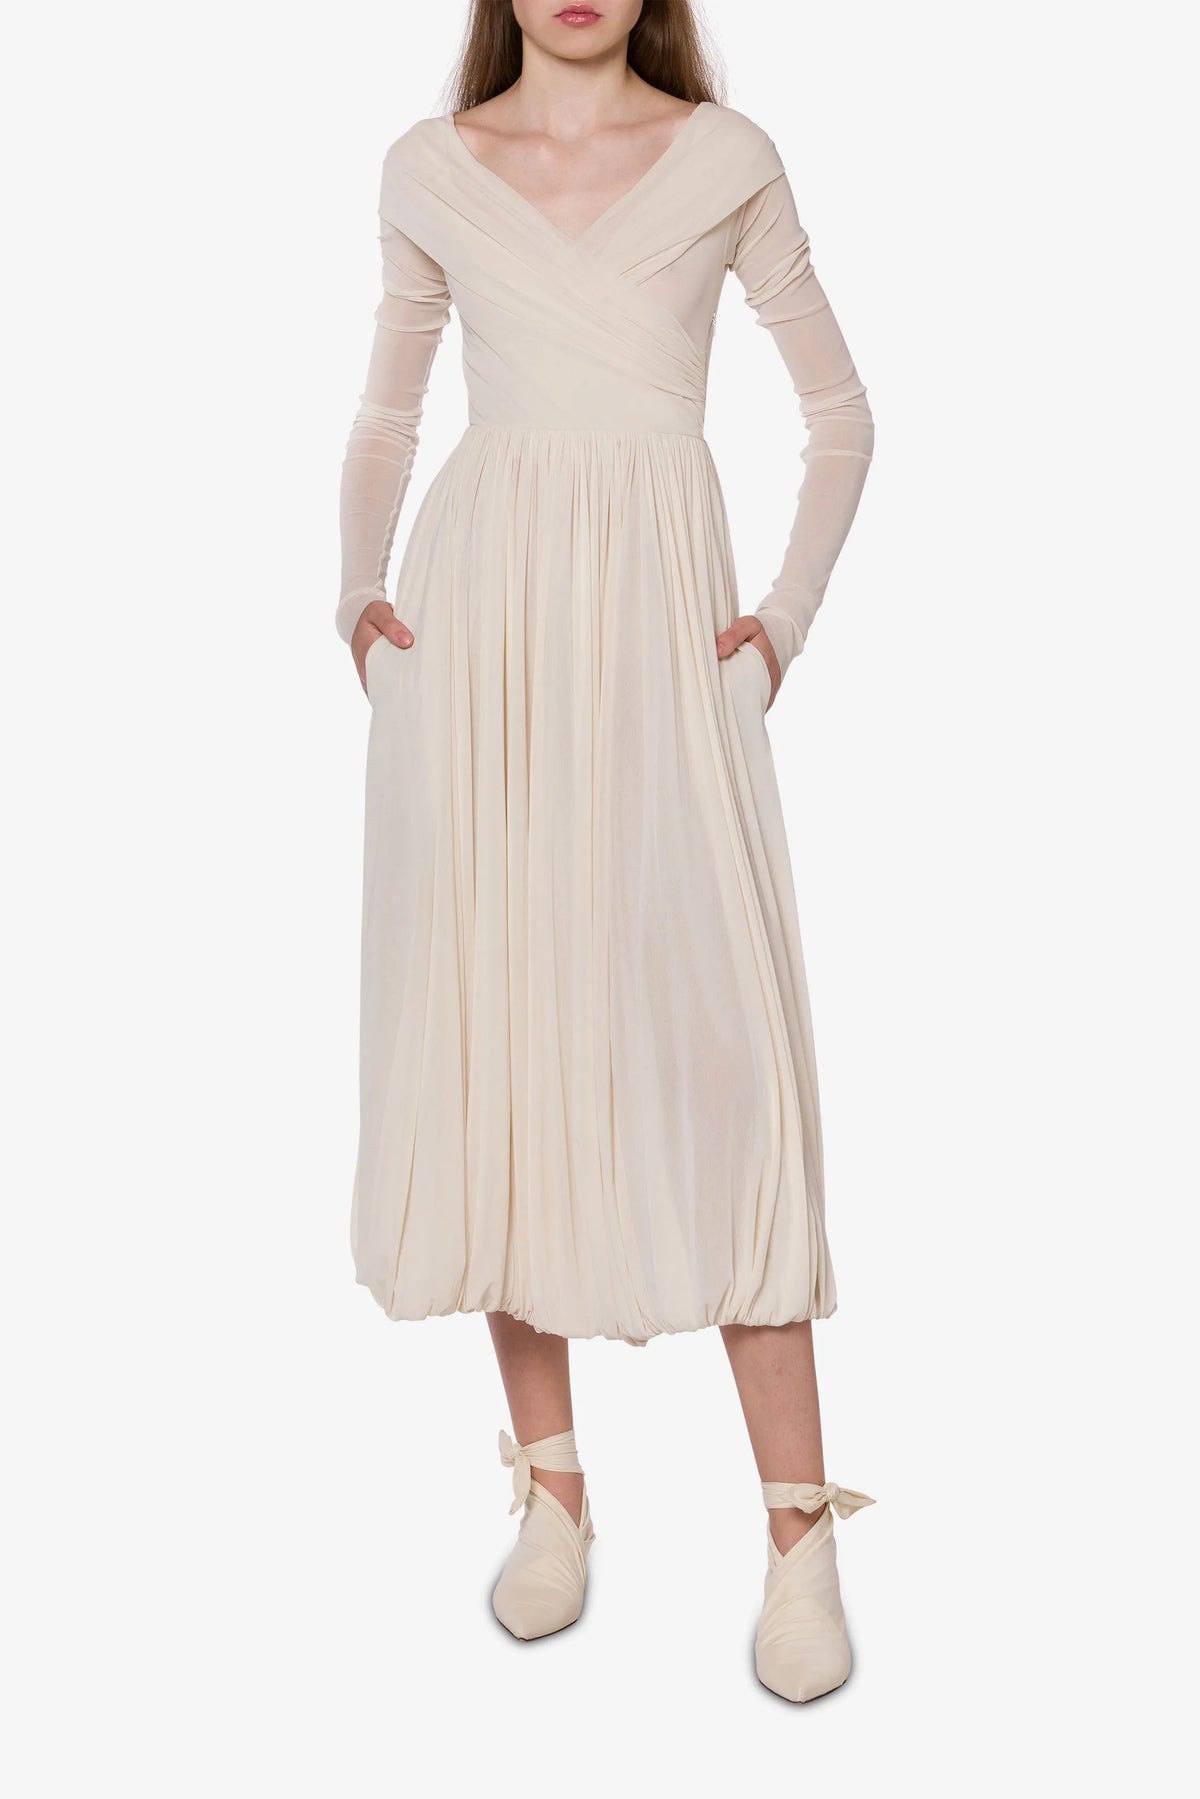 Philosophy Longuette Dress in Stretch Tulle